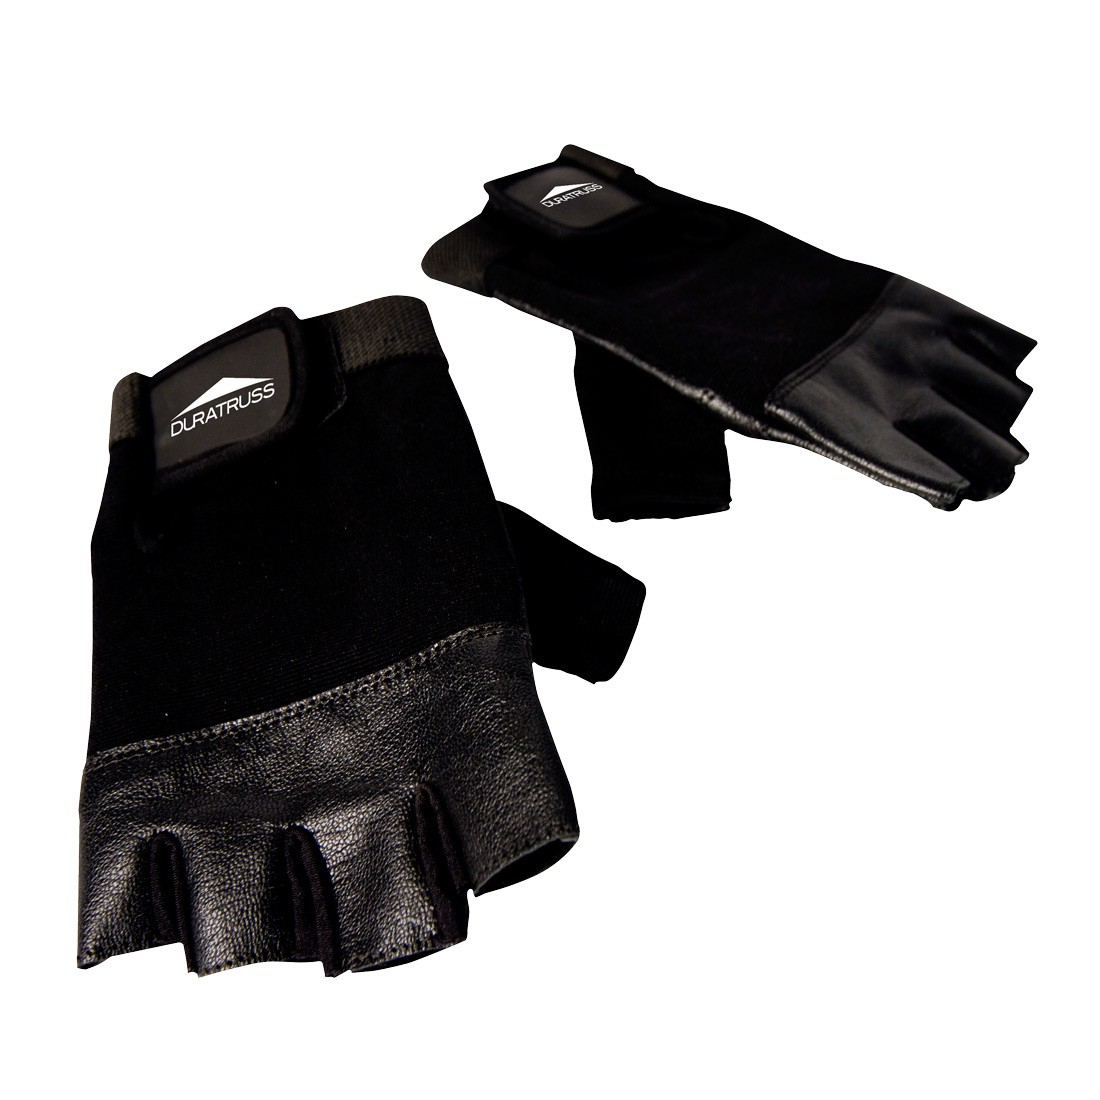 Duratruss DT Truss gloves size L